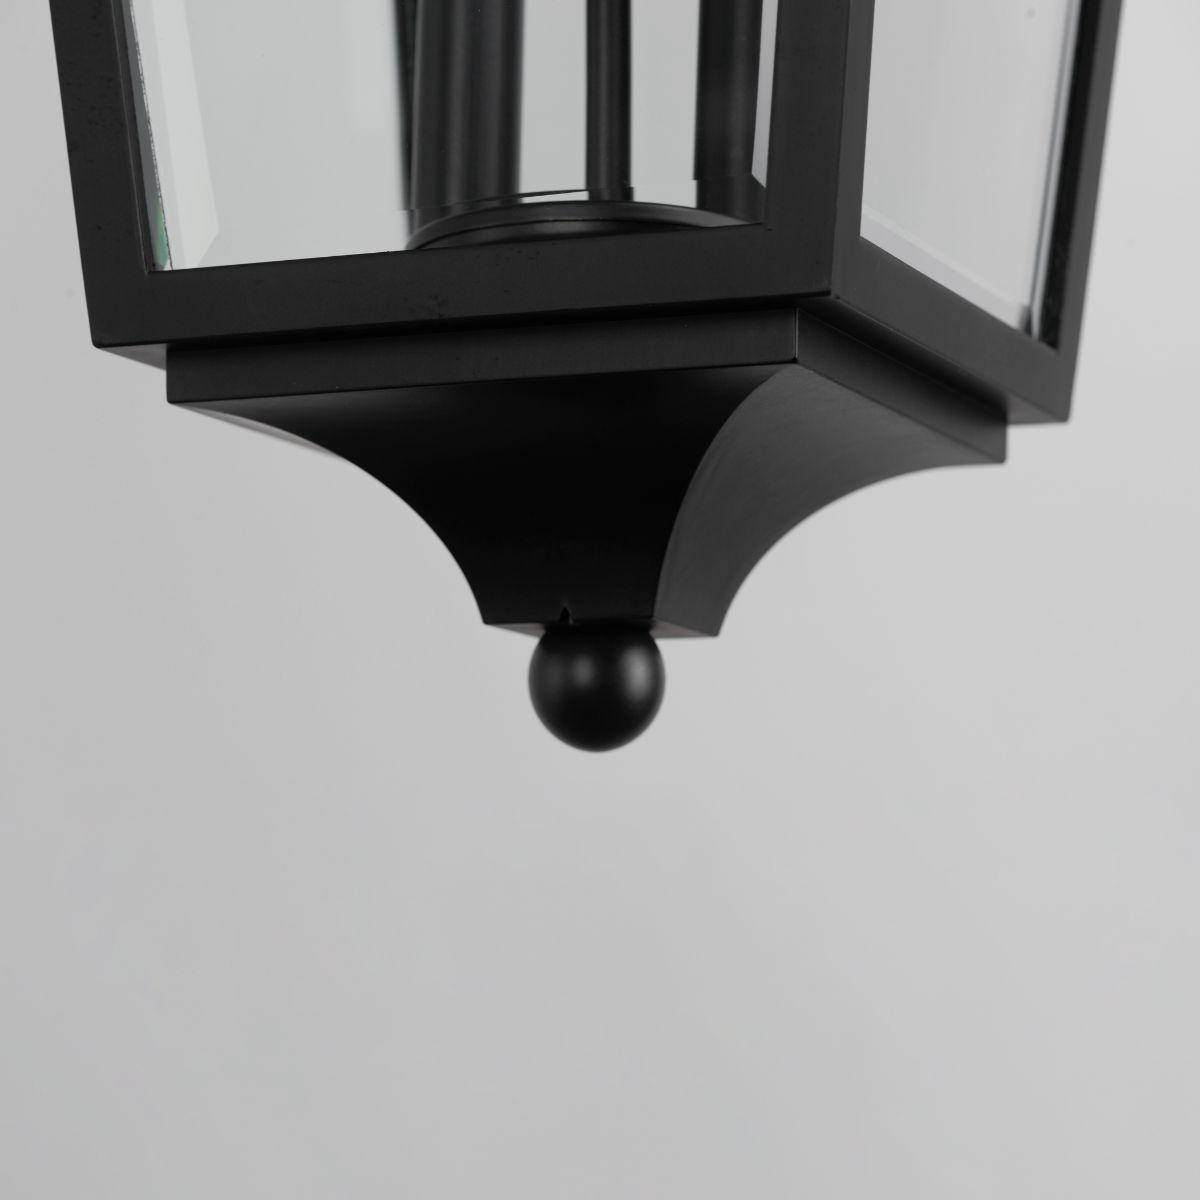 SUTTON PLACE VX 24 in. 2 Lights Outdoor Hanging Lantern Black finish